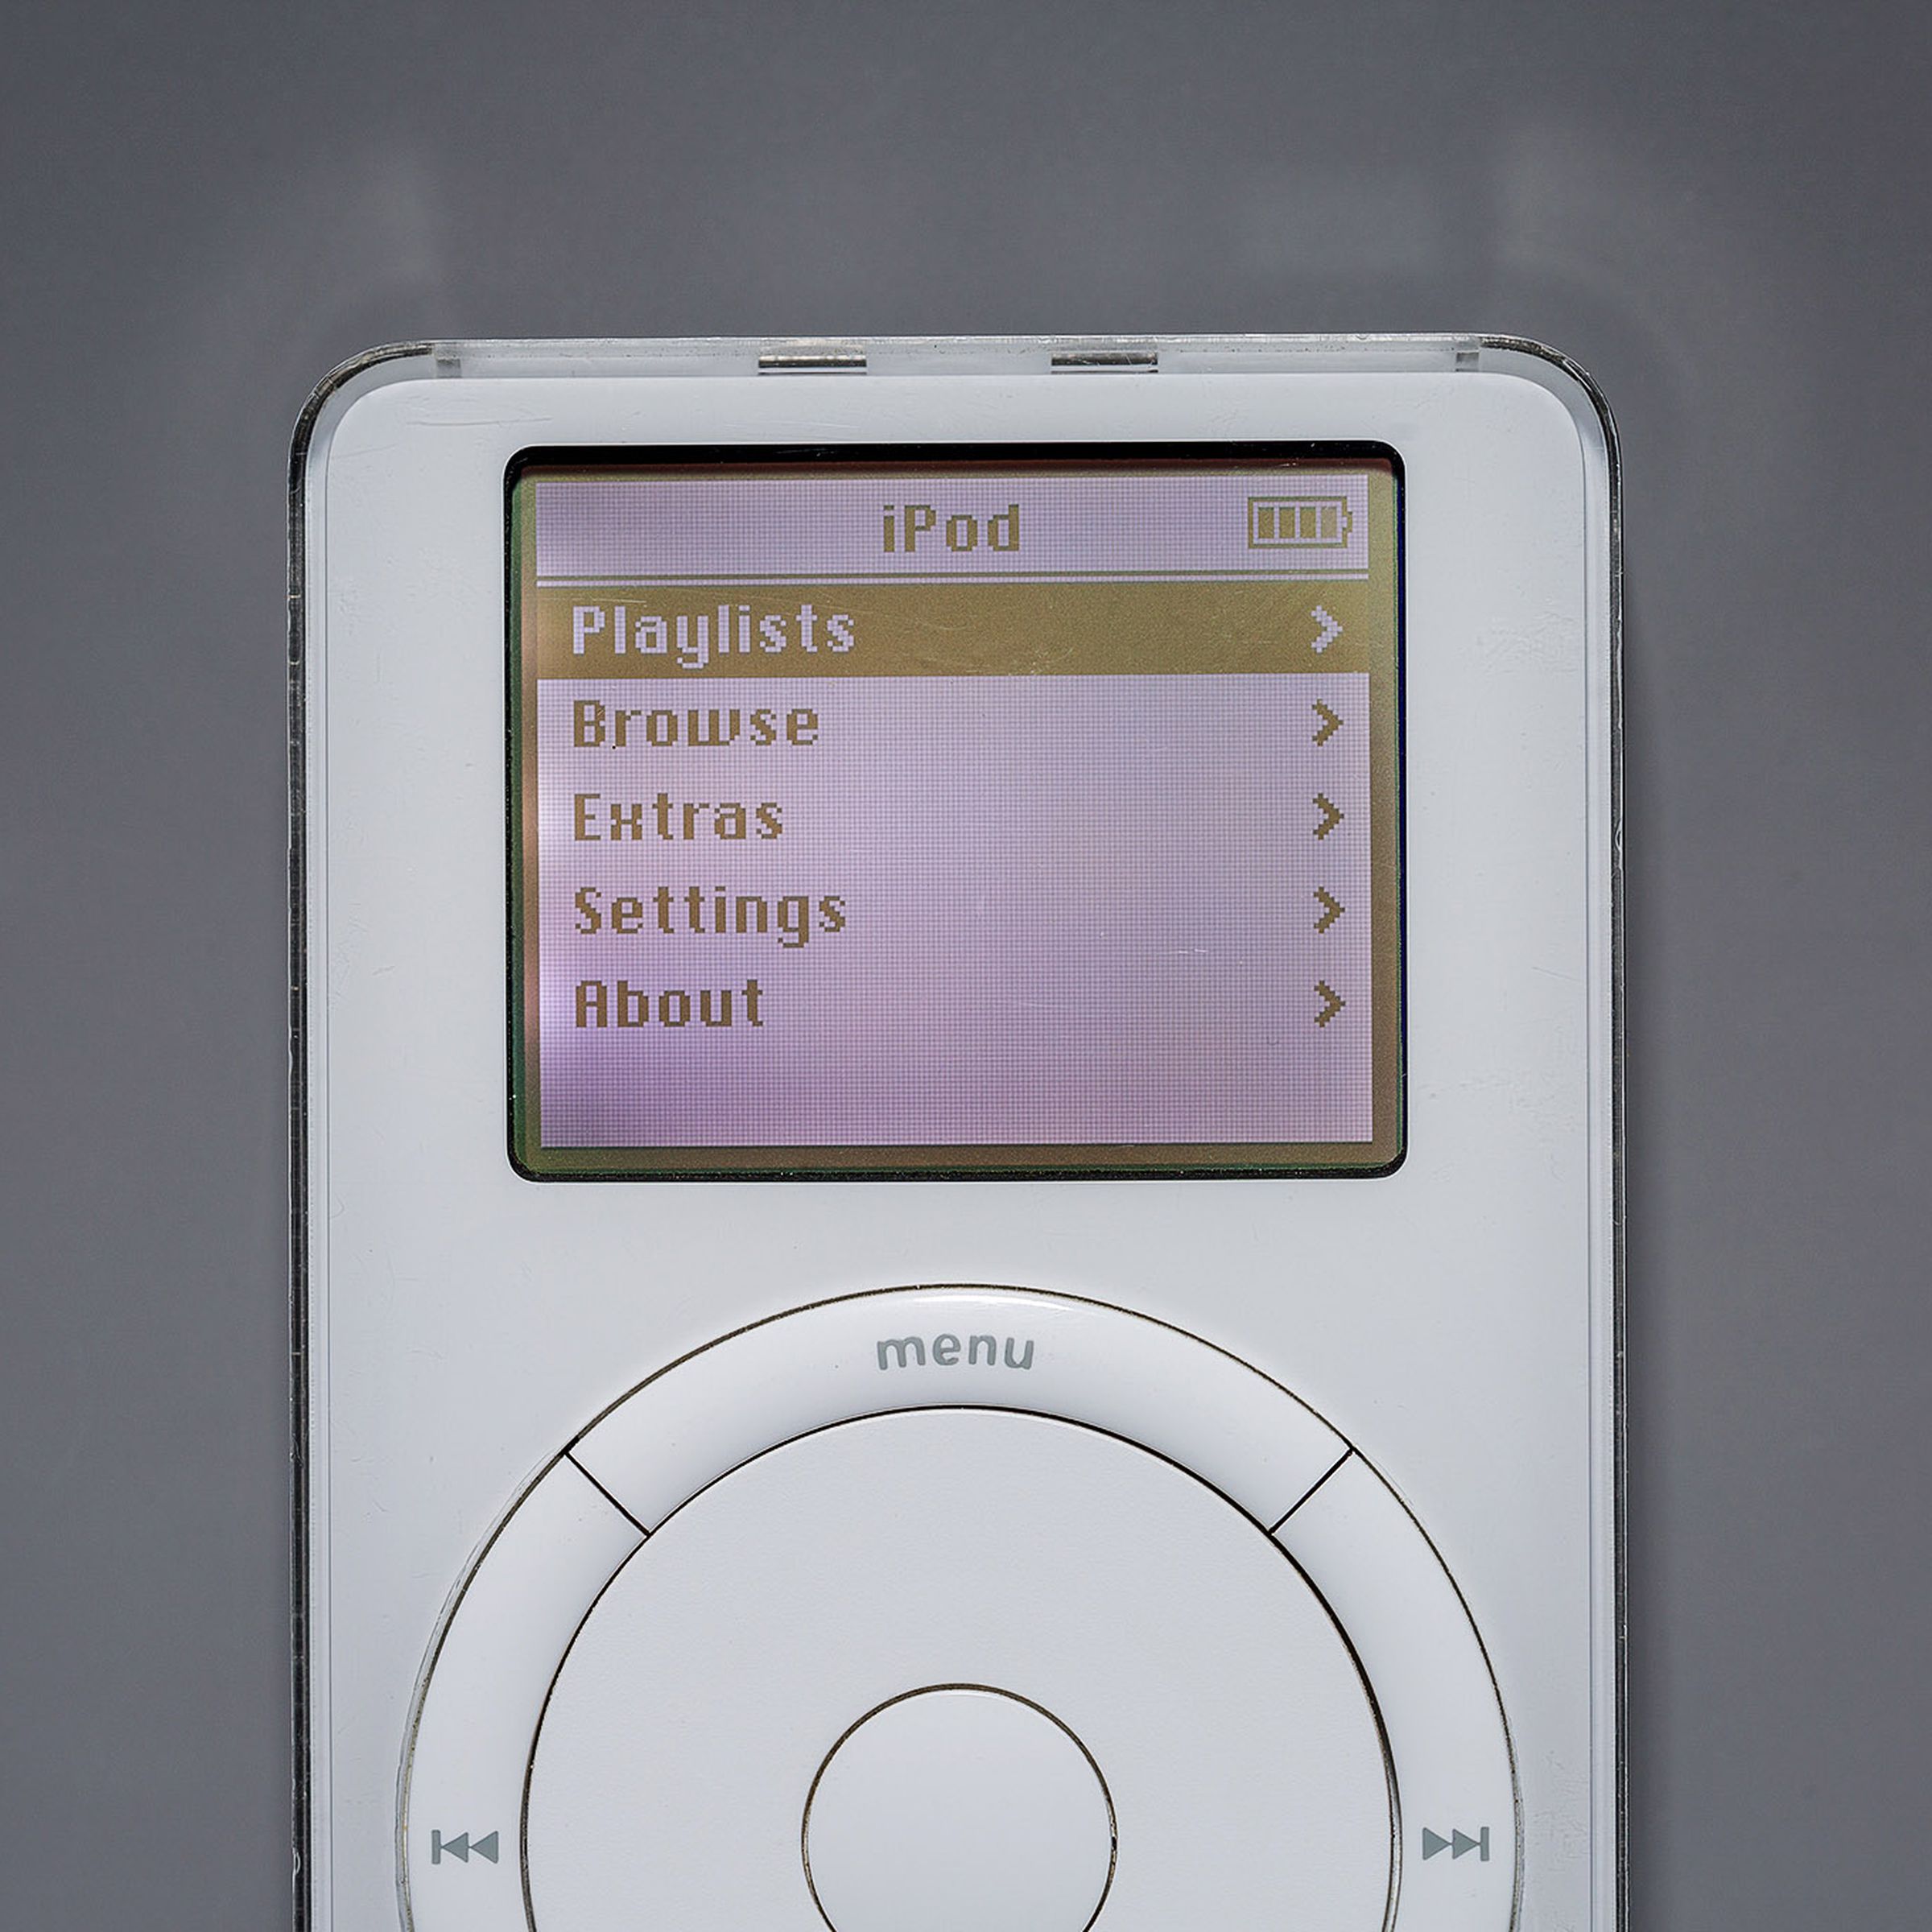 Apple’s original iPod